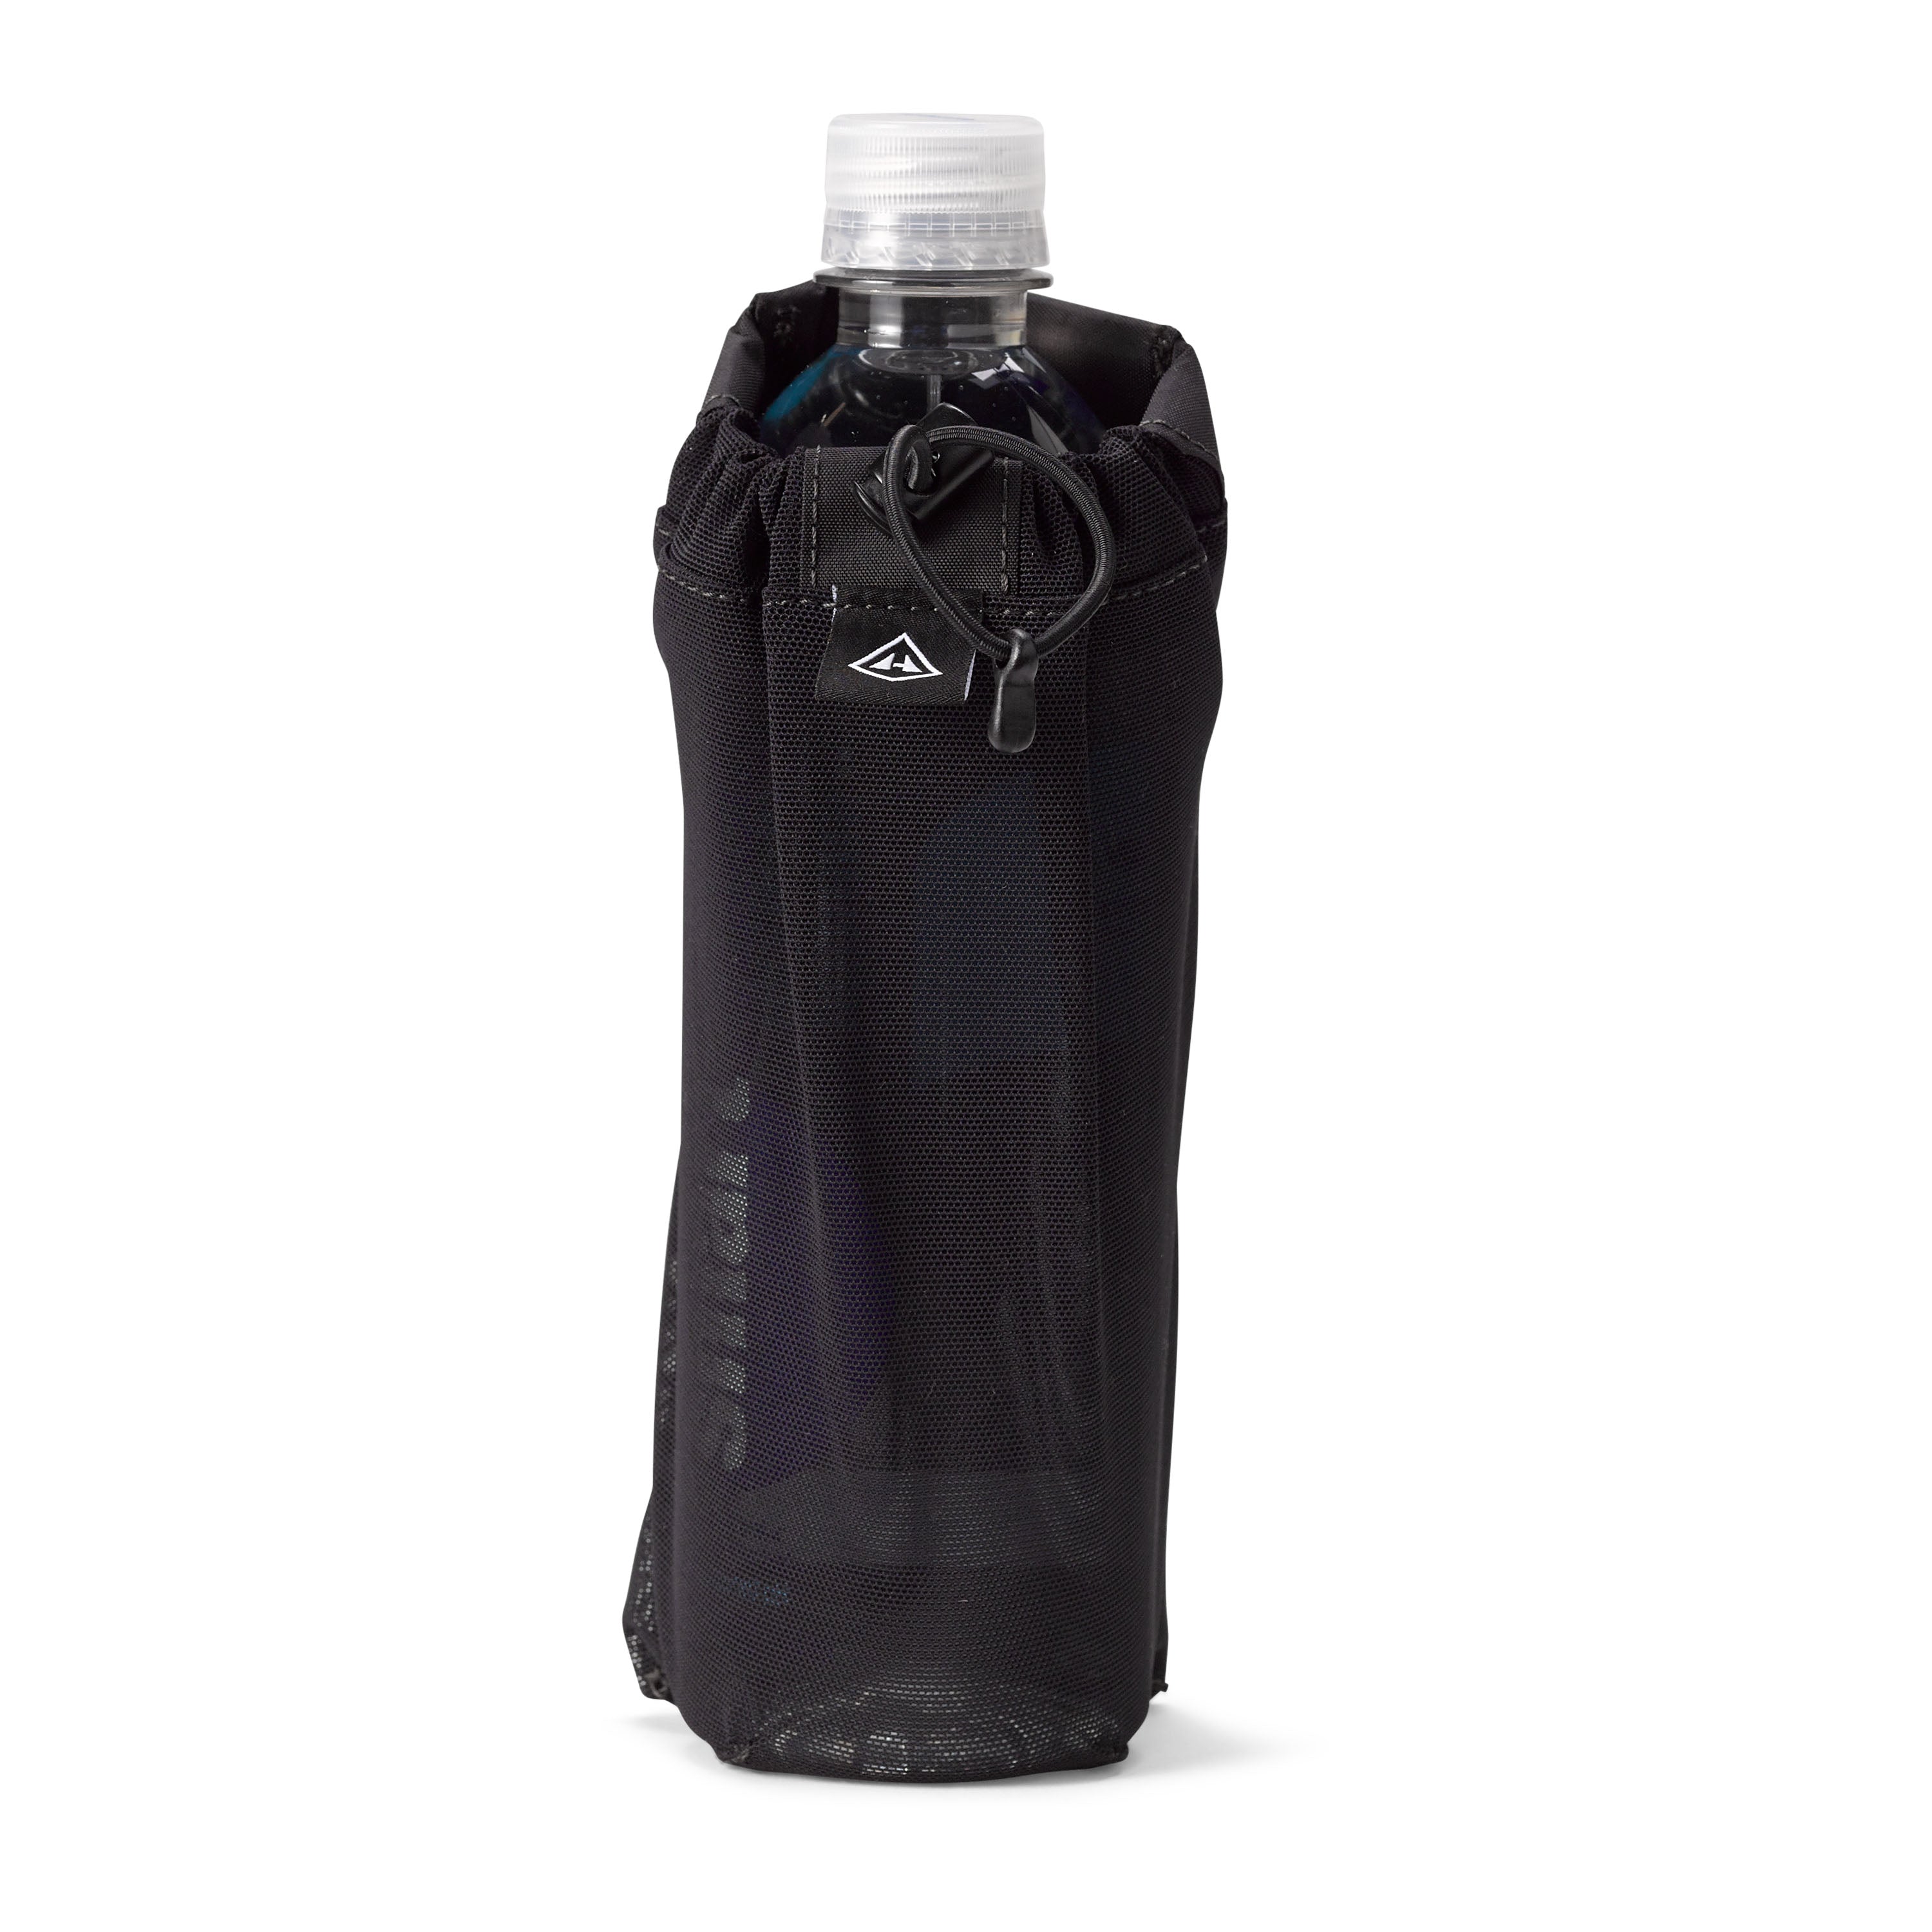 Hyperlite Mountain Gear Porter Water Bottle Holder - 20 oz